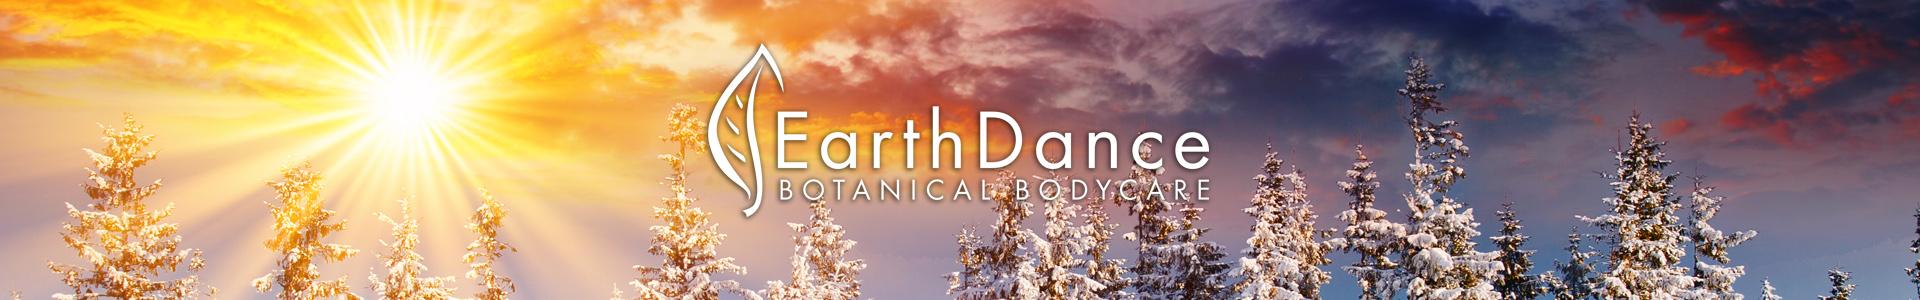 Earth Dance Botanical Bodycare logo